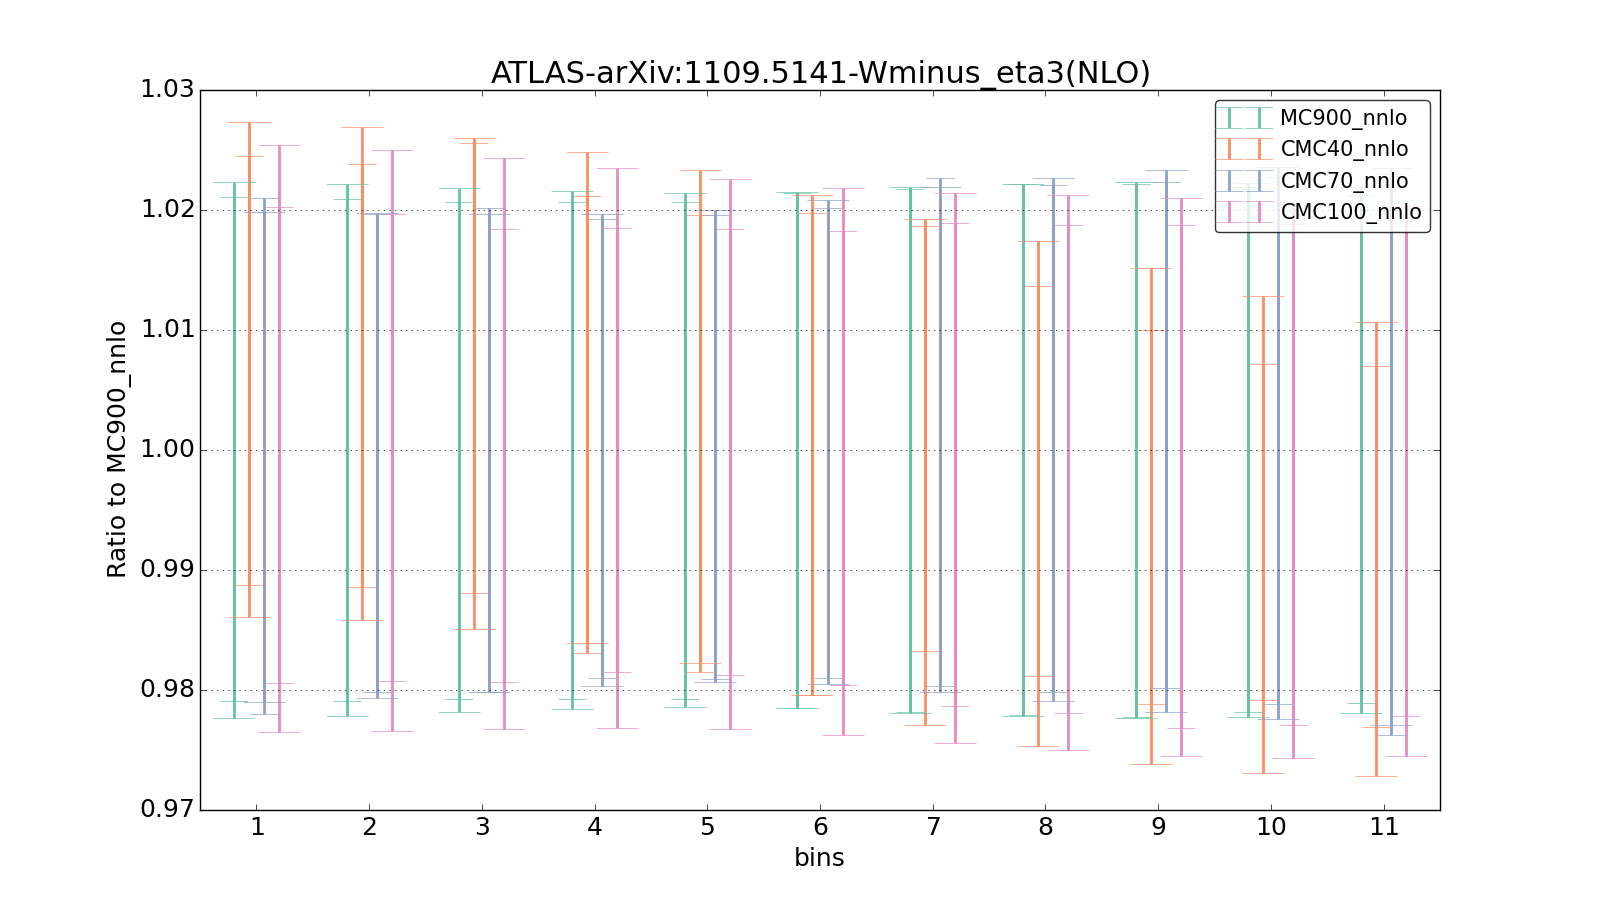 figure plots/CMCpheno/group_0_ciplot_ATLAS-arXiv:11095141-Wminus_eta3(NLO).png